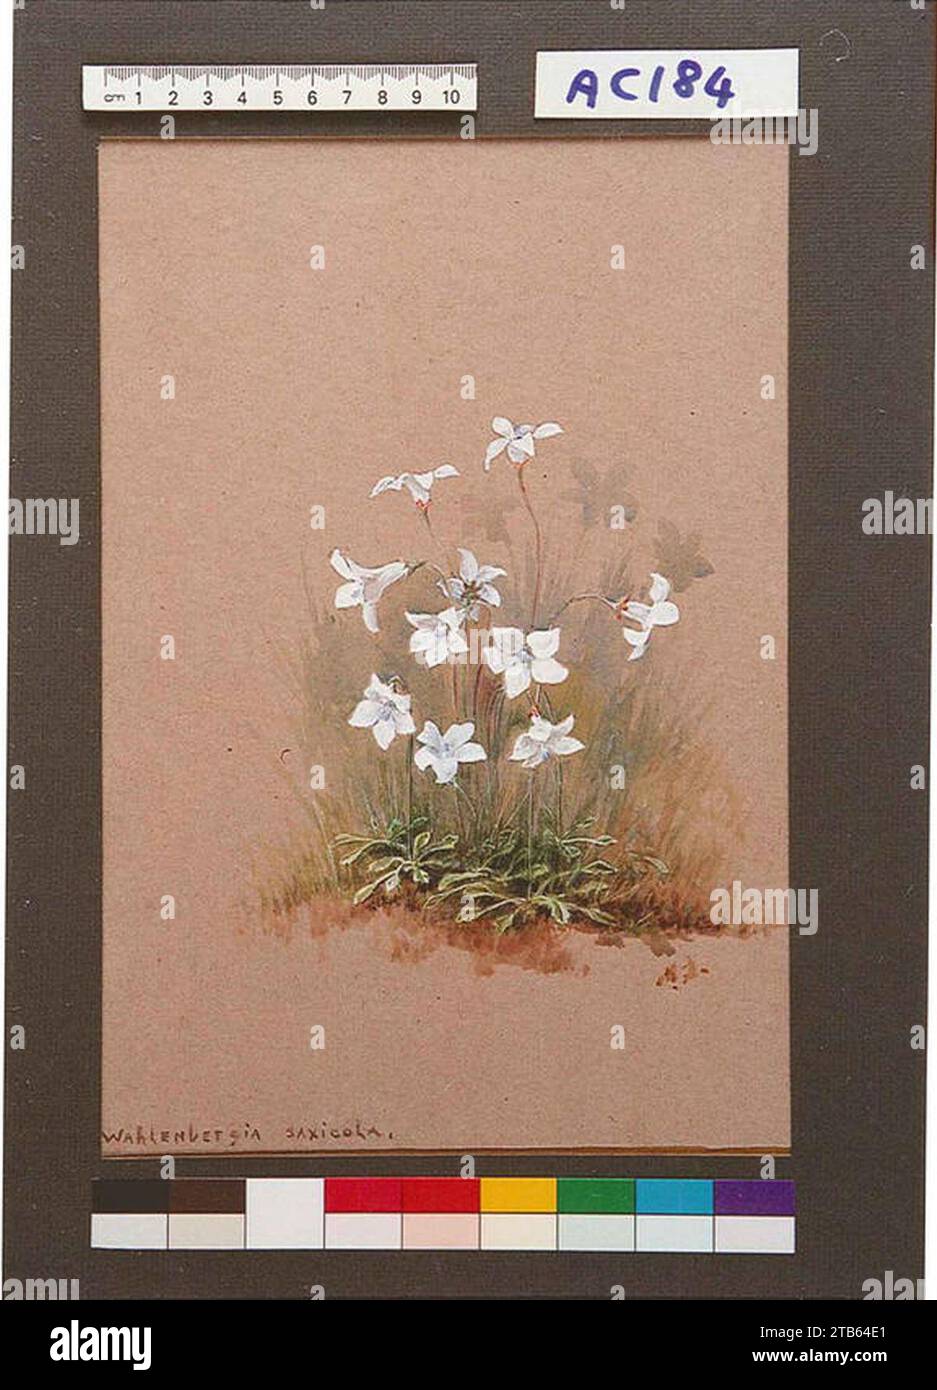 Wahlenbergia saxicola by Nina Jones ac184. Stock Photo